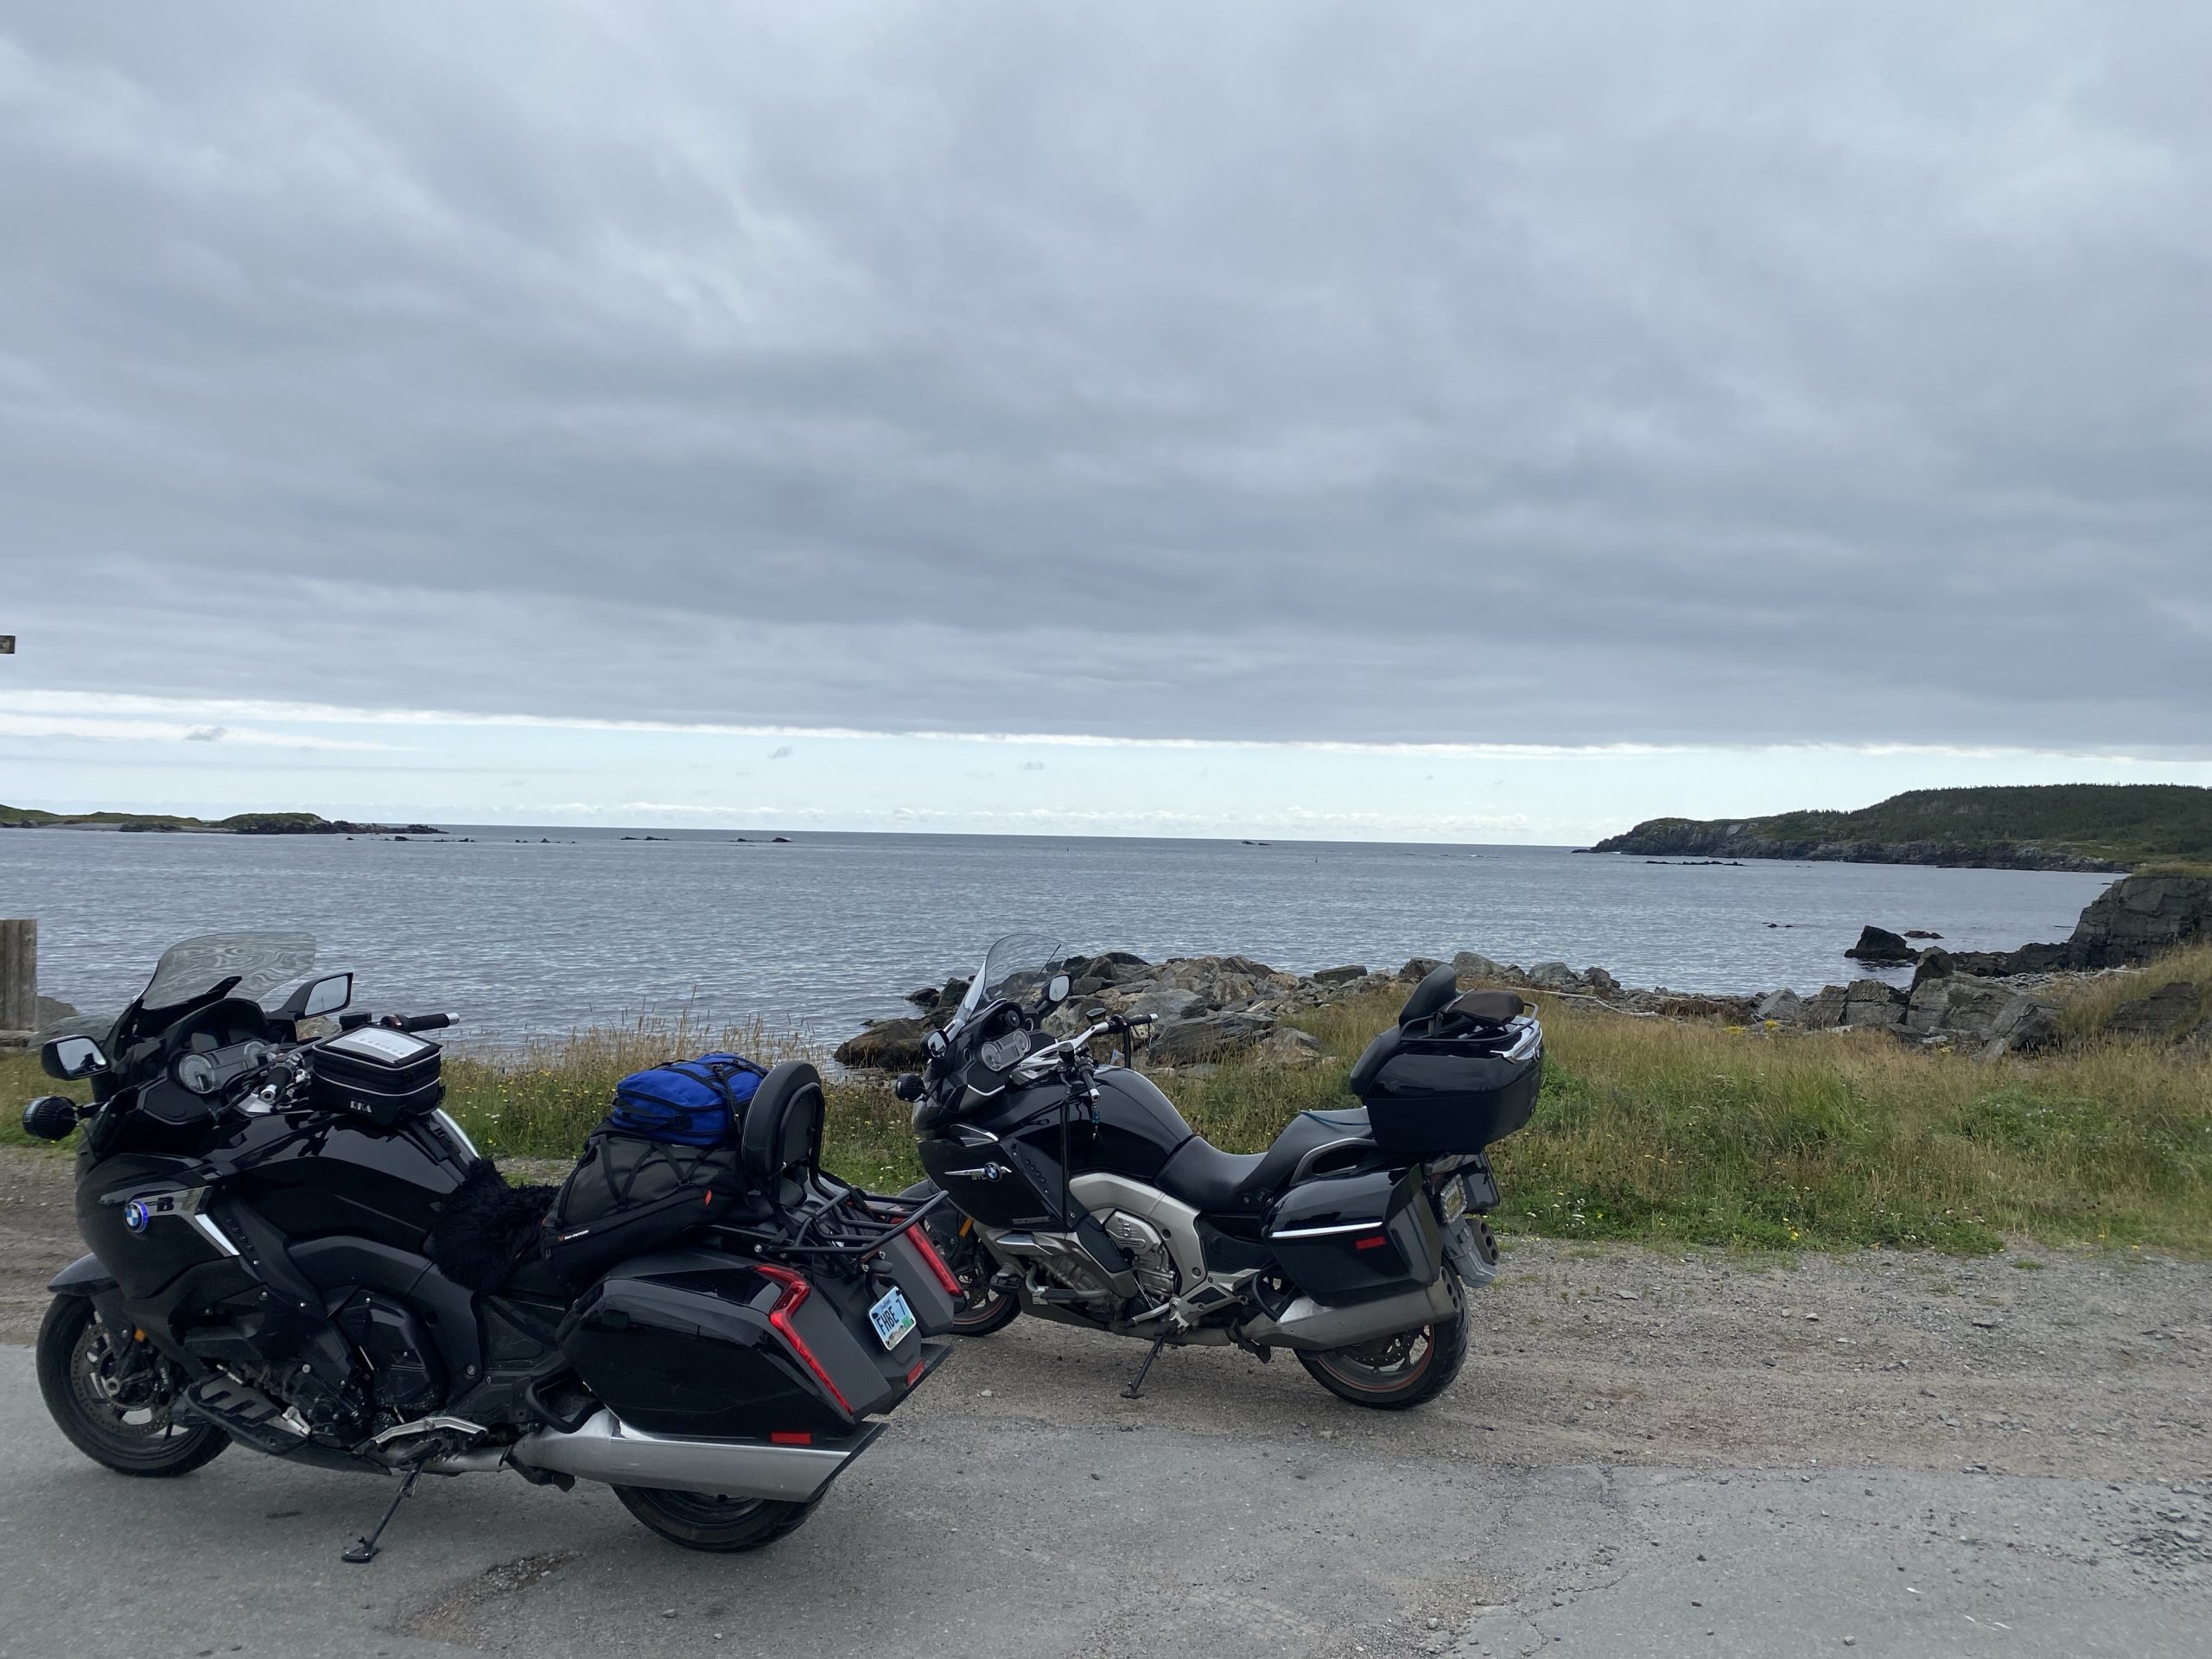 The bikes on the Bonavista Peninsula coast at Melrose, in Newfoundland.